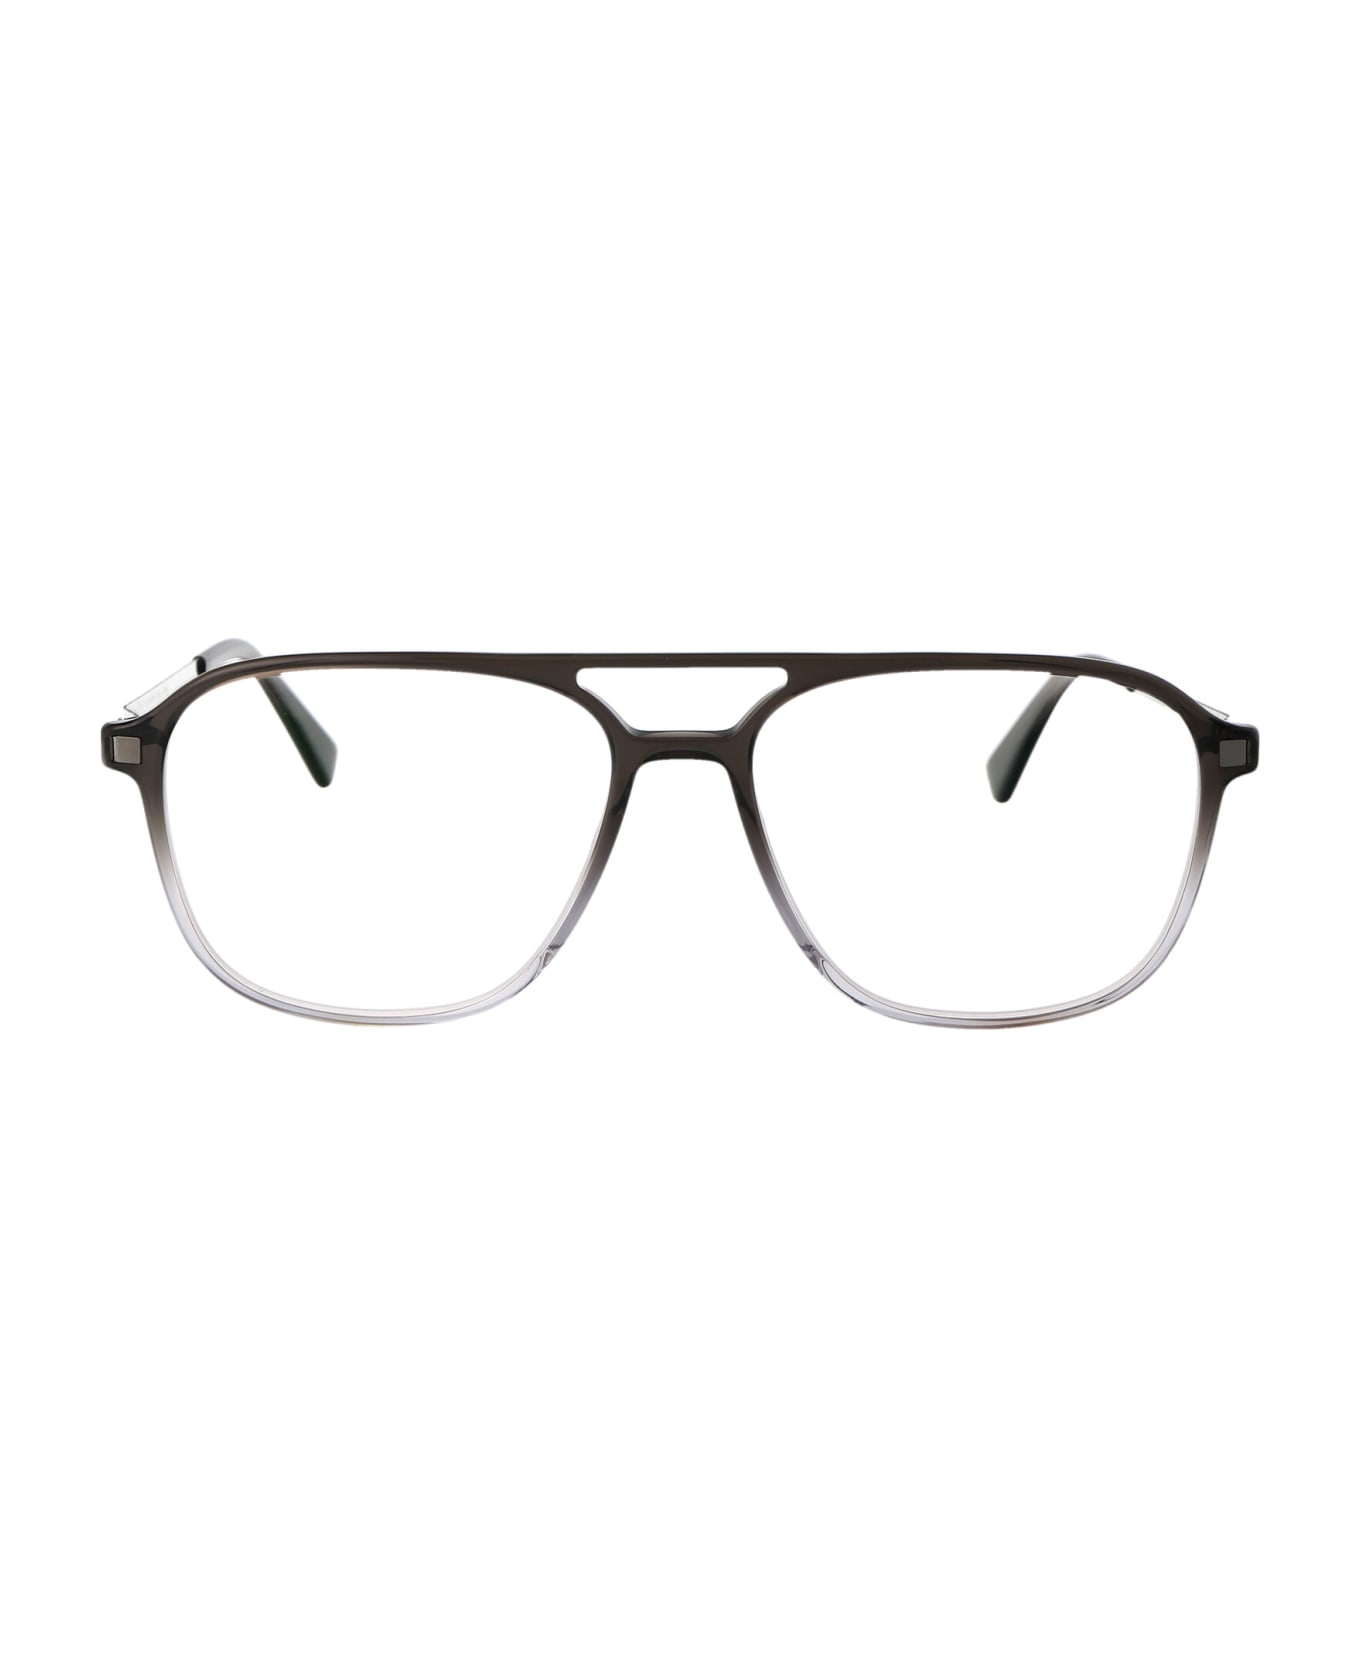 Mykita Gylfi Glasses - 981 C42-Grey Gradient/Shiny Graphi Clear